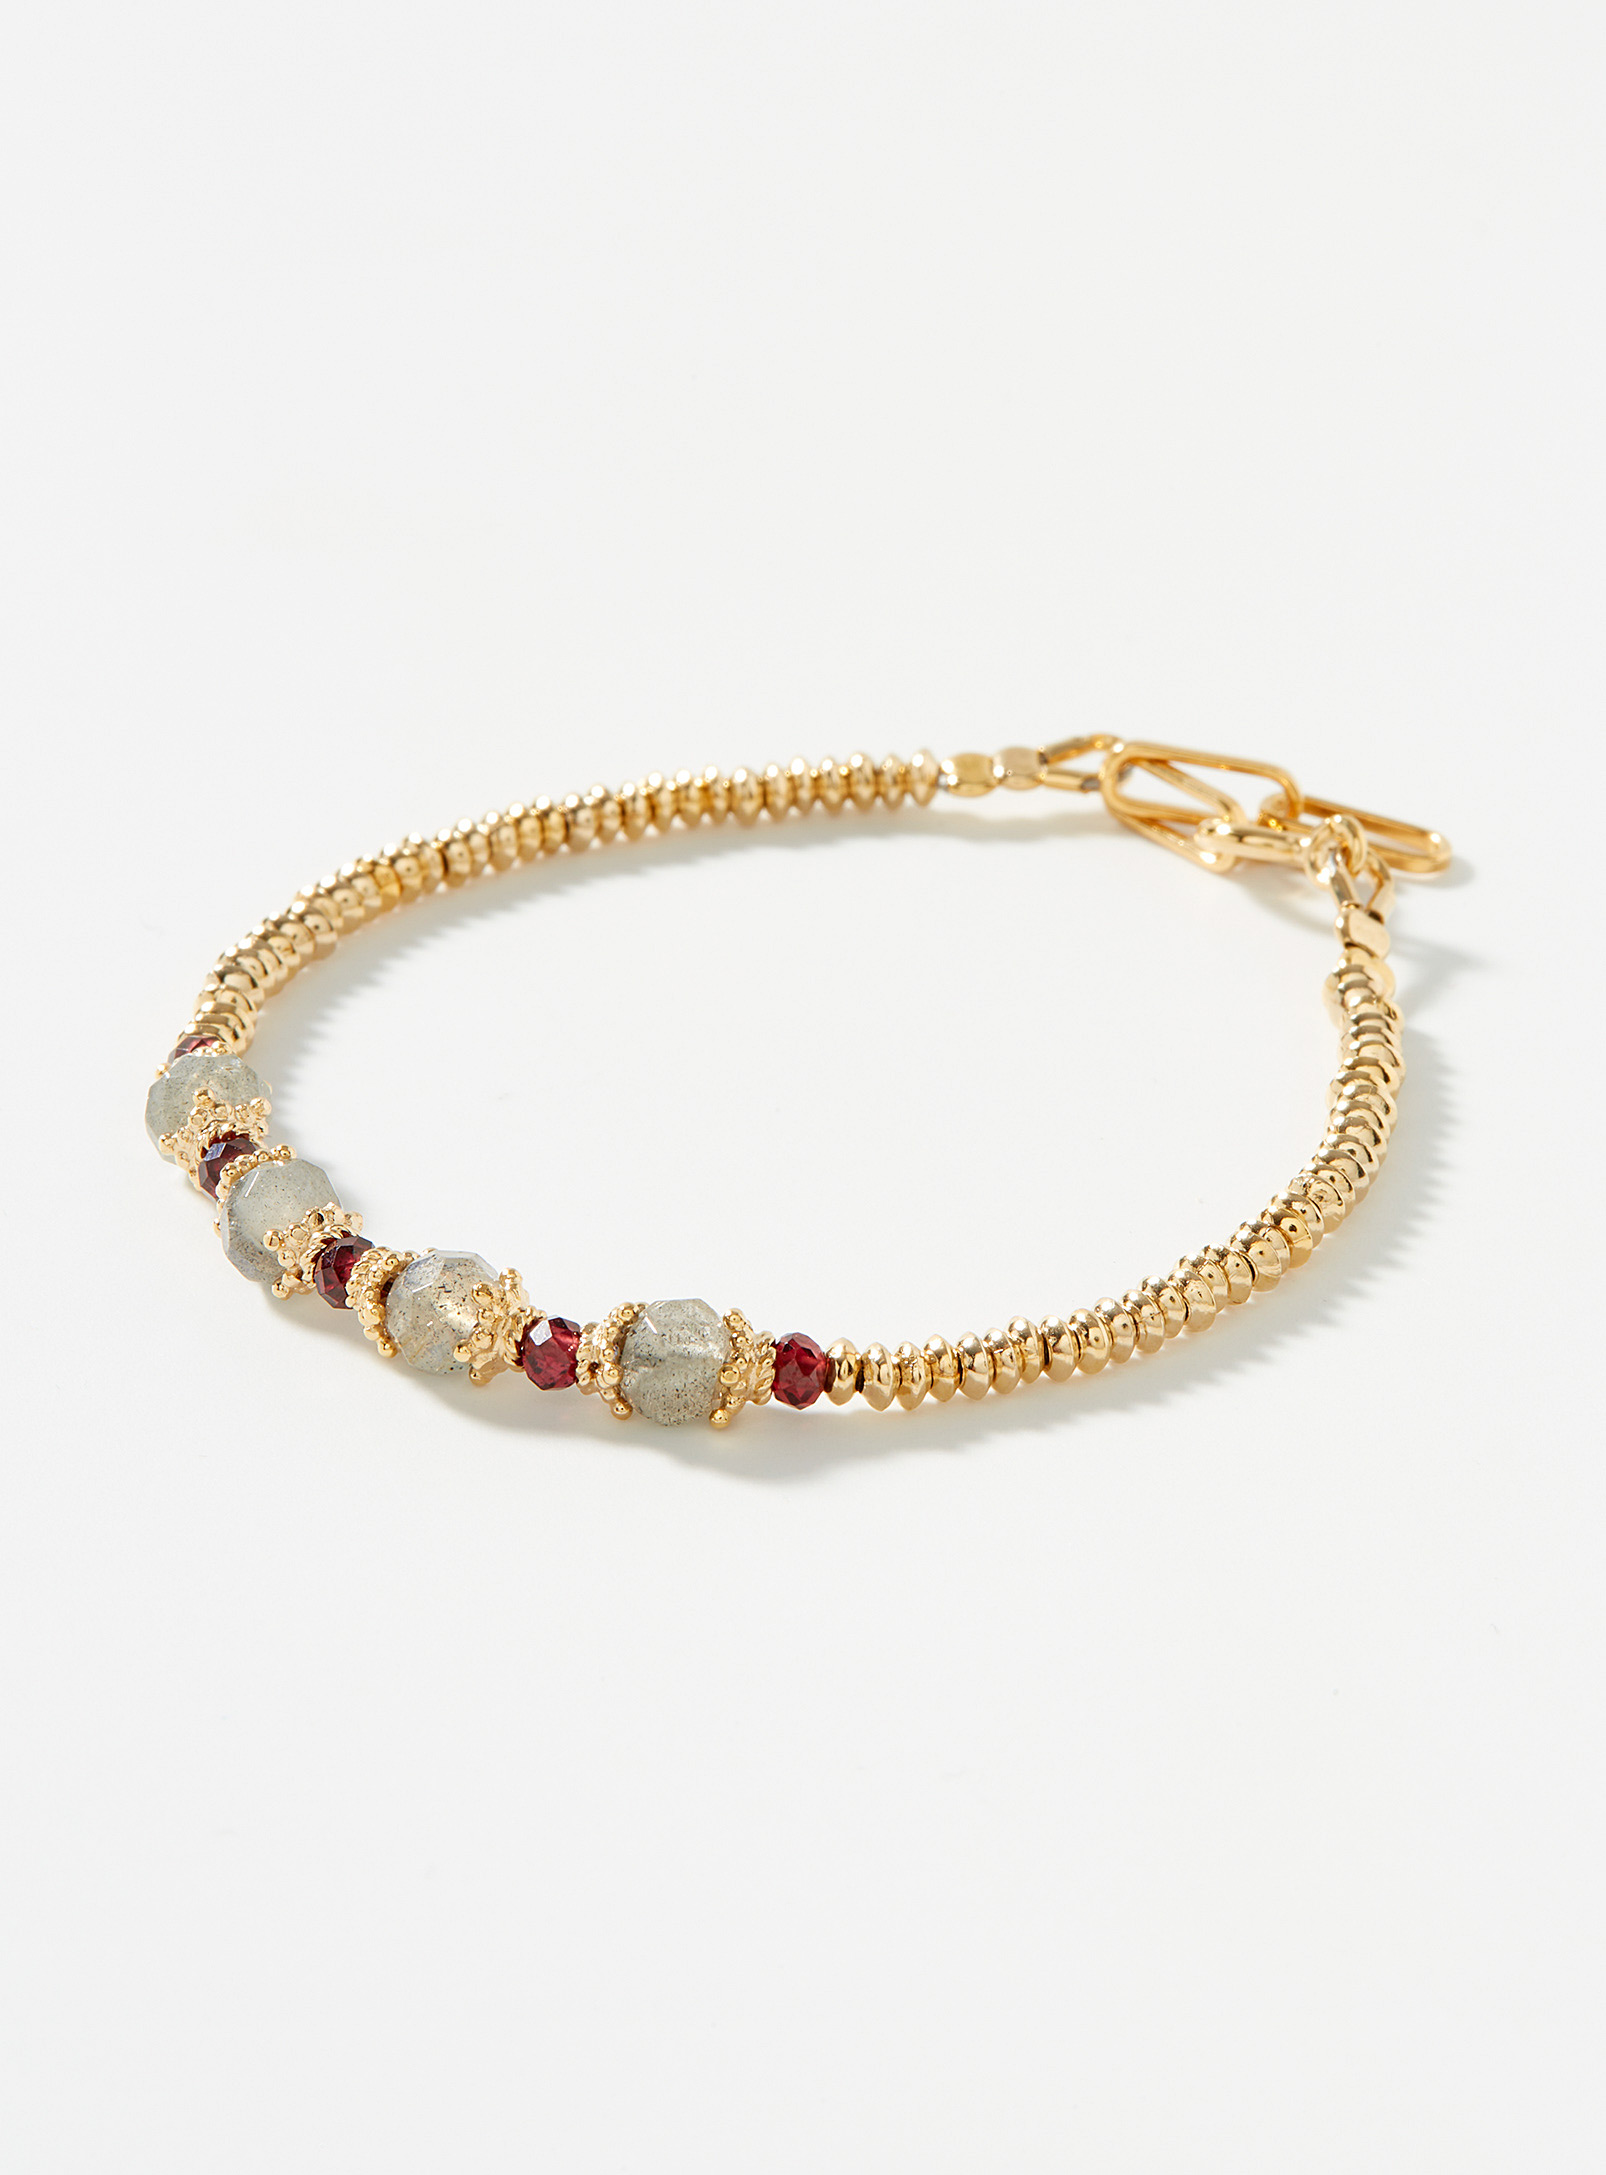 Tityaravy - Women's Sriphala beads bracelet